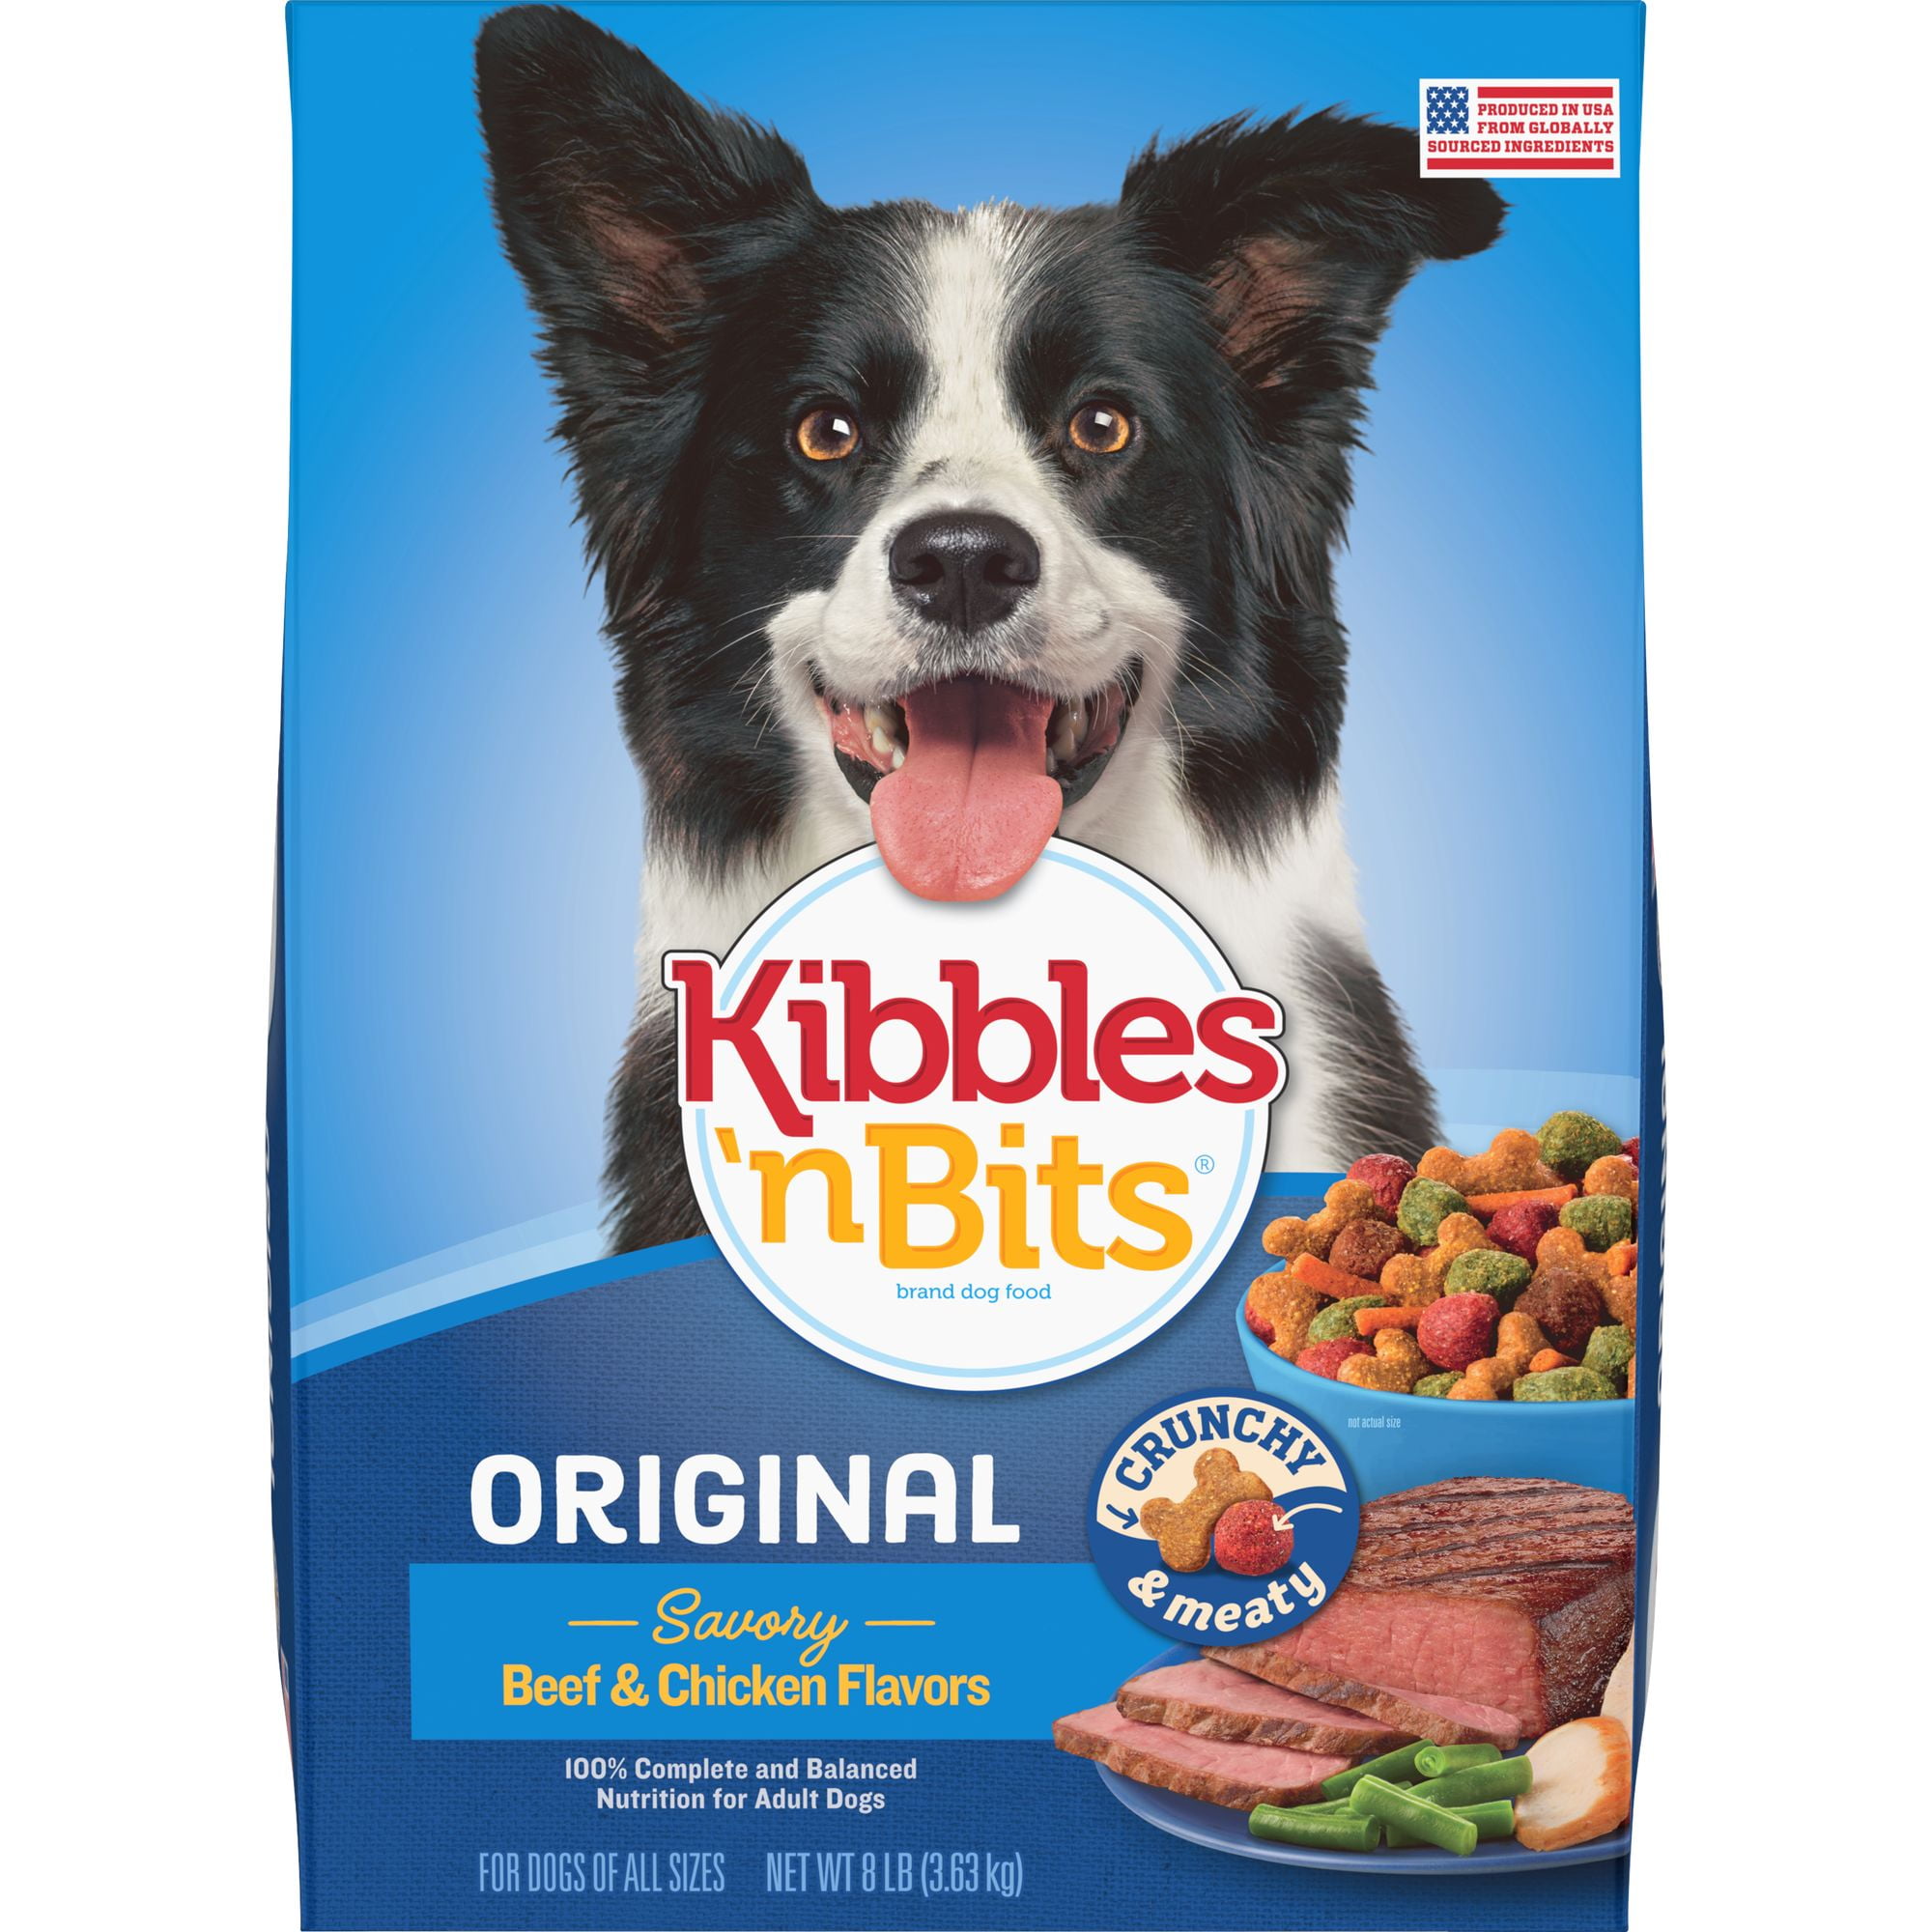 company that makes kibbles and bits dog food